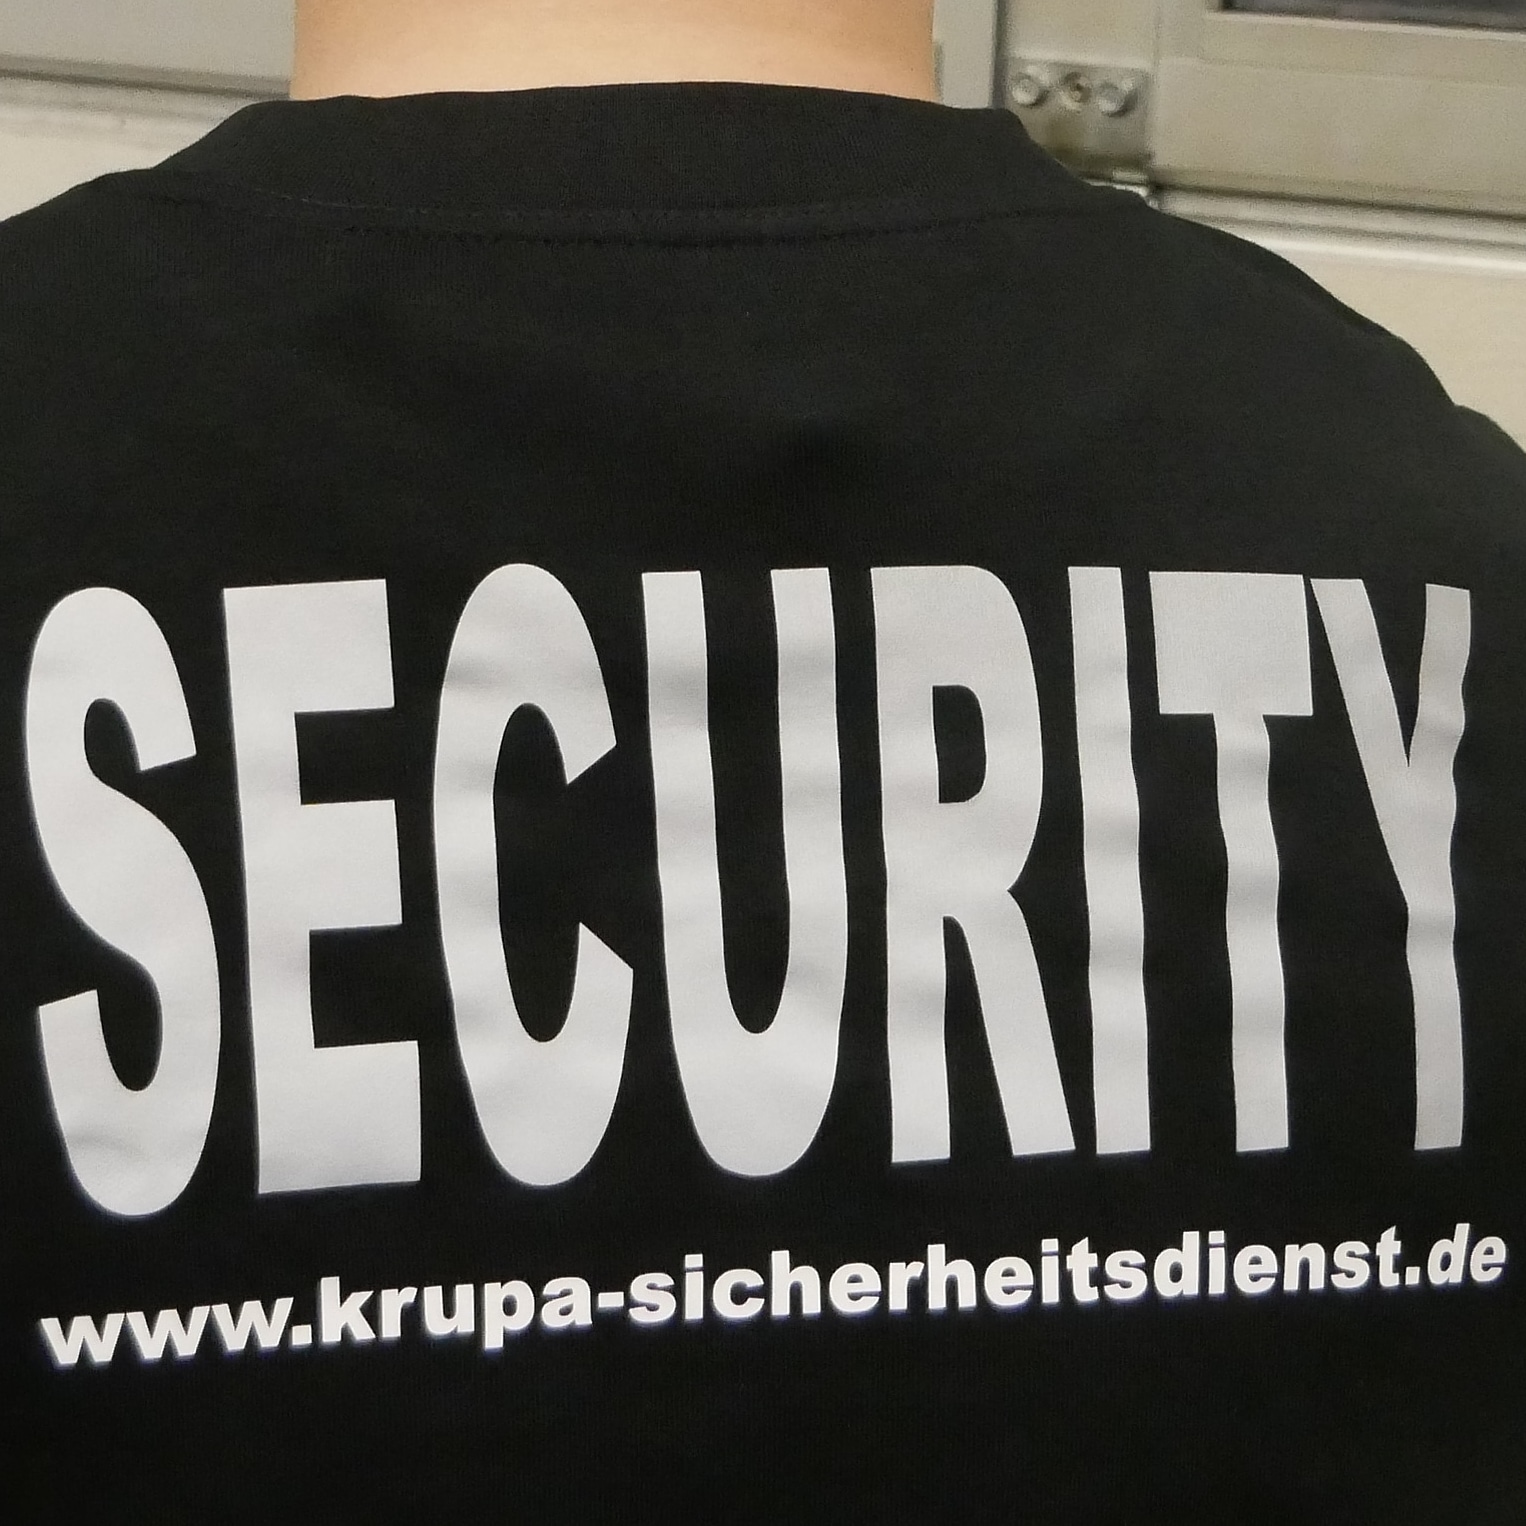 Security: qualitative Sicherungen